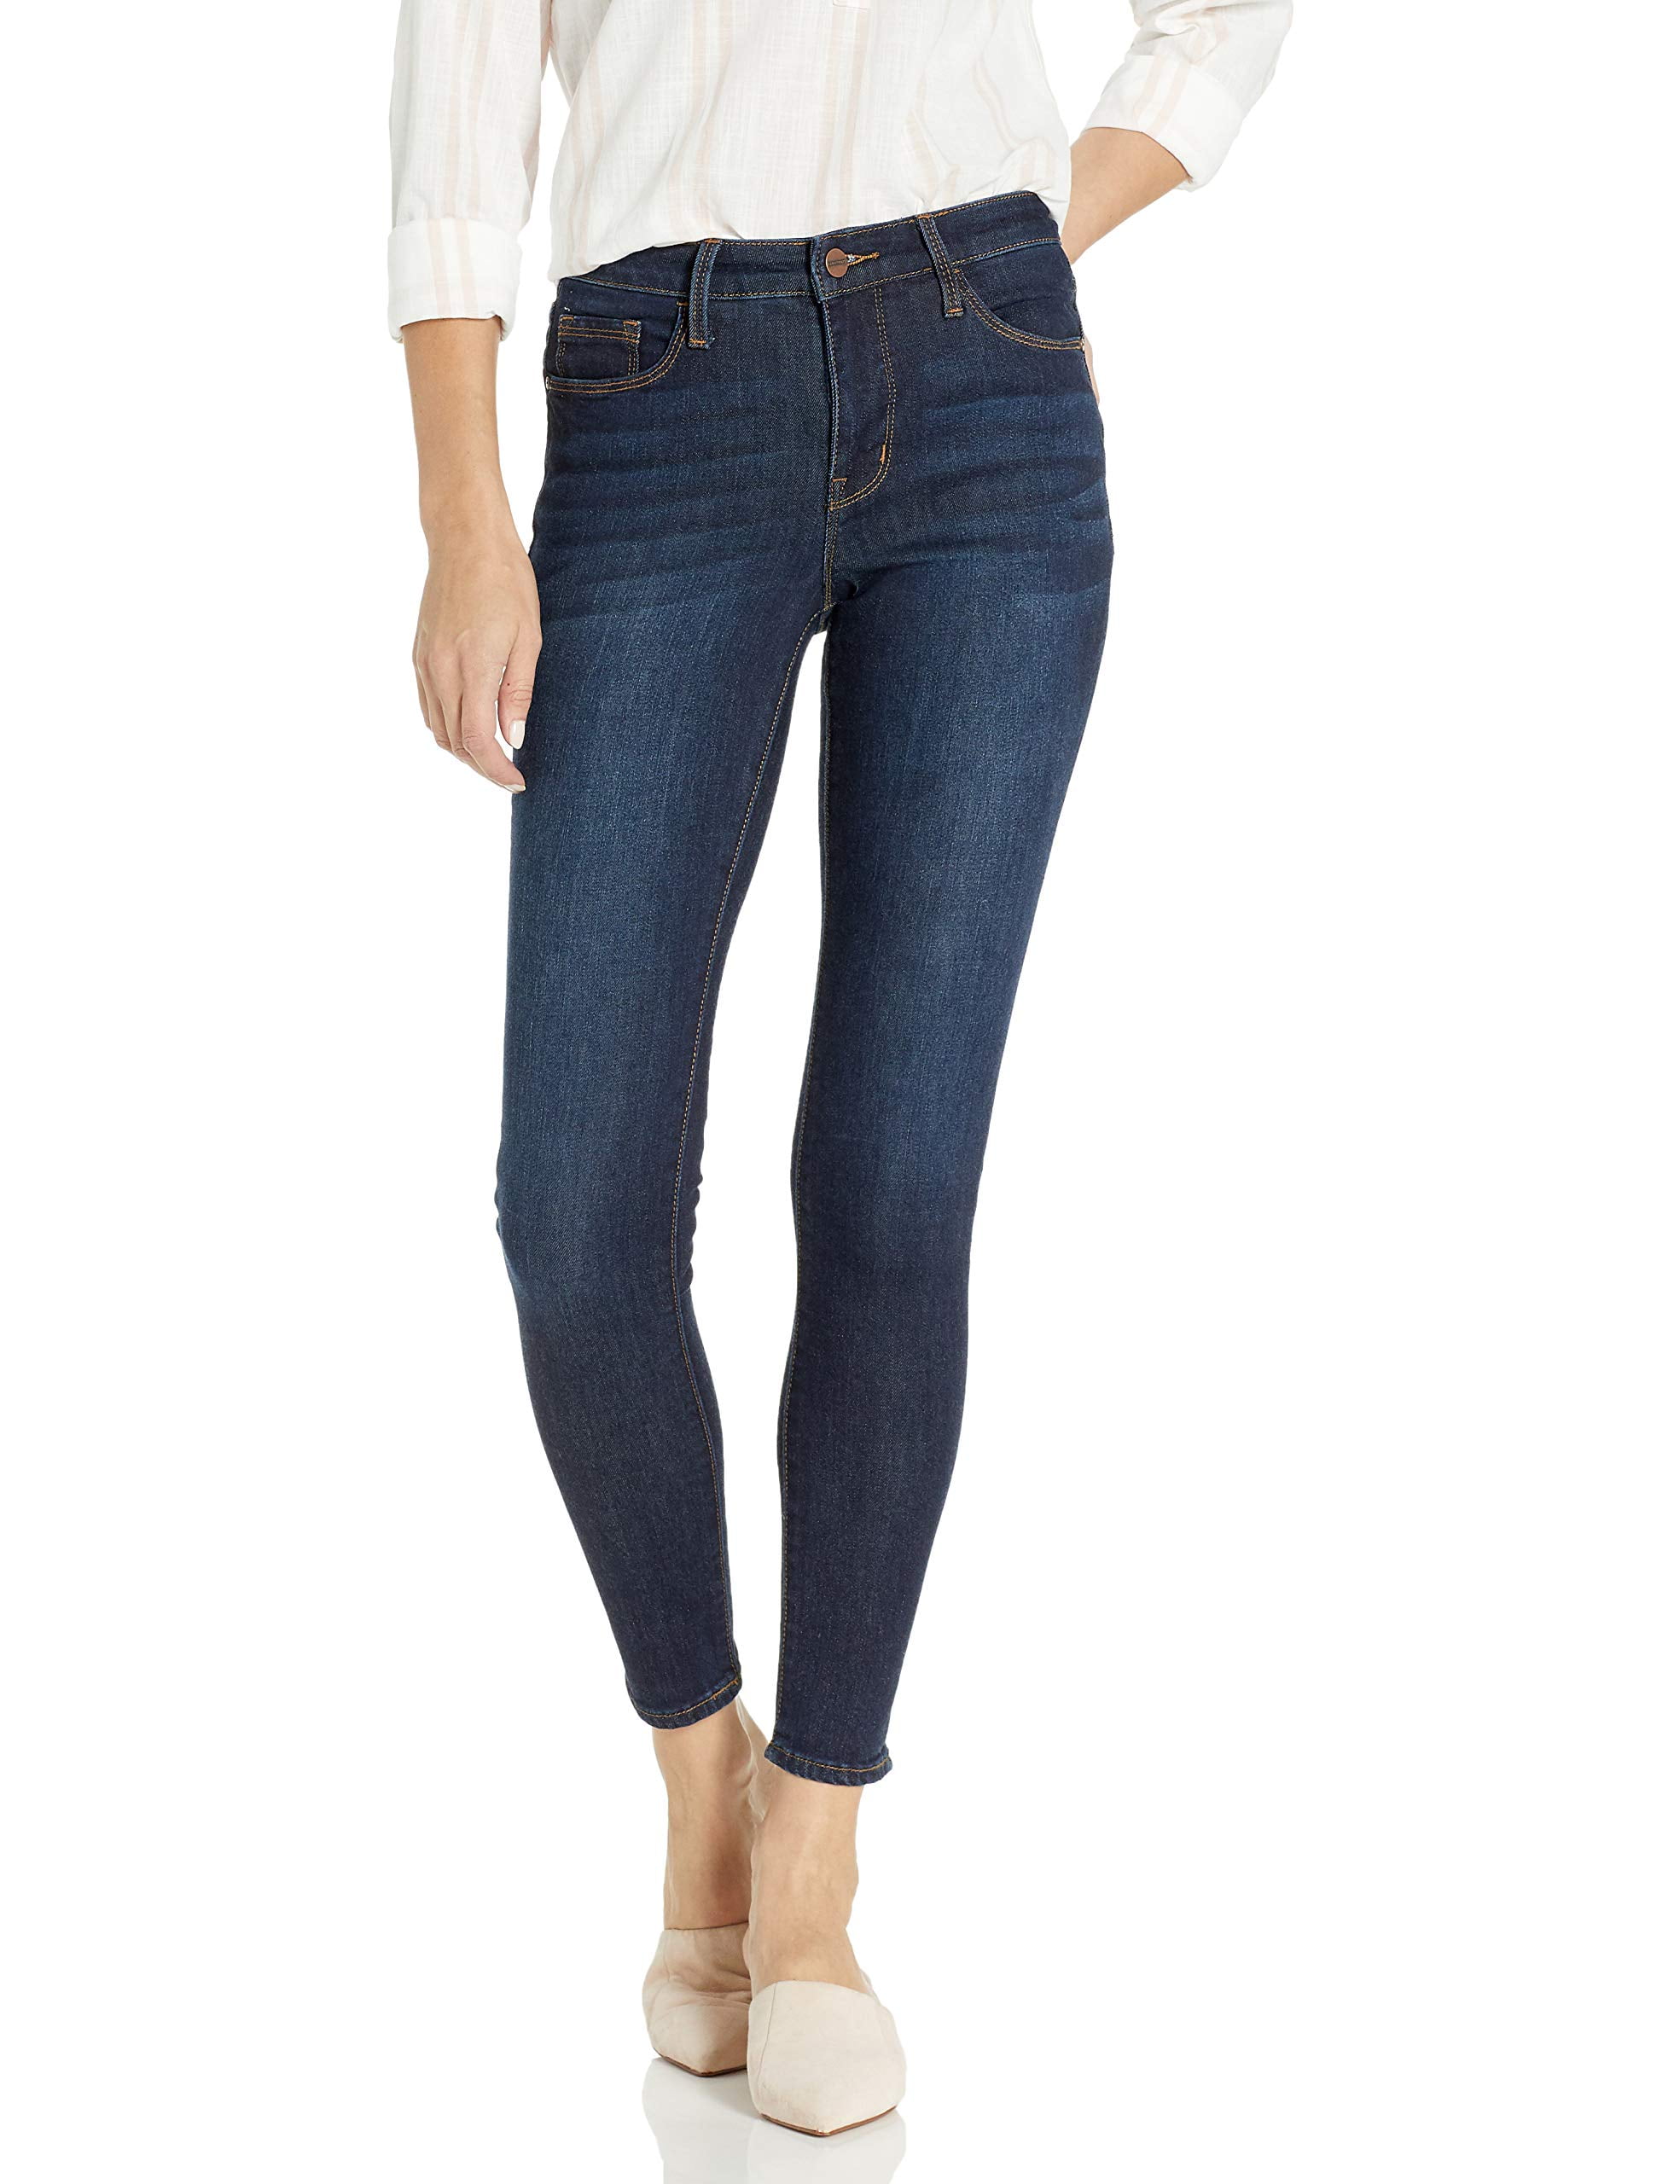 Sanctuary Women's Social Standard Skinny Jean, Bluestone, 33 - Walmart.com